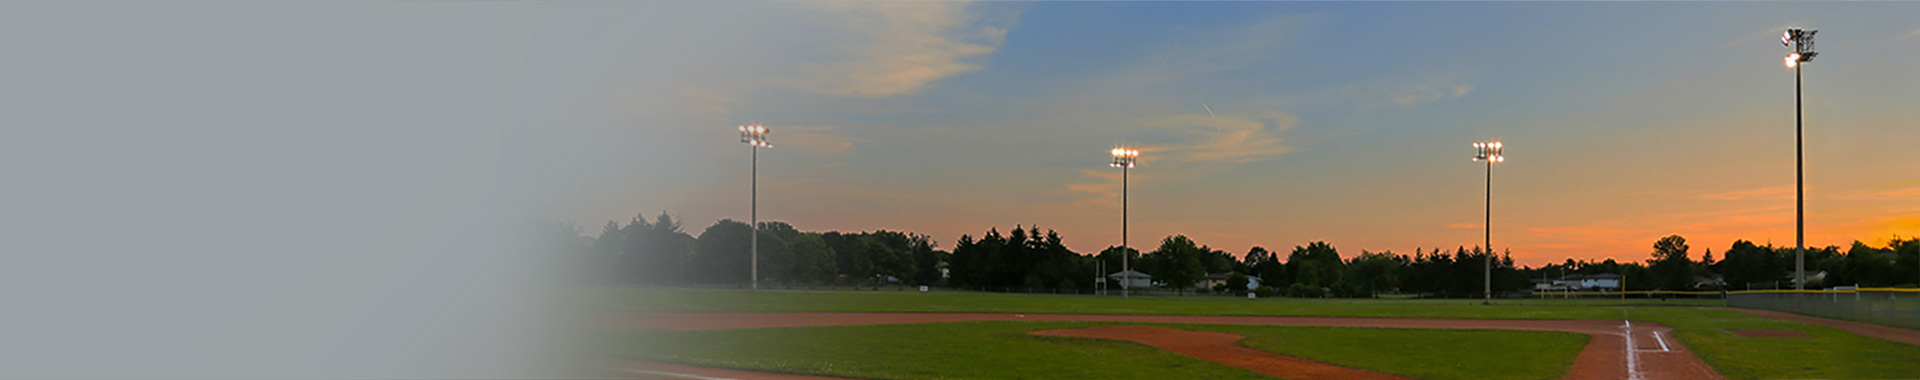 Sports and Stadium Lighting